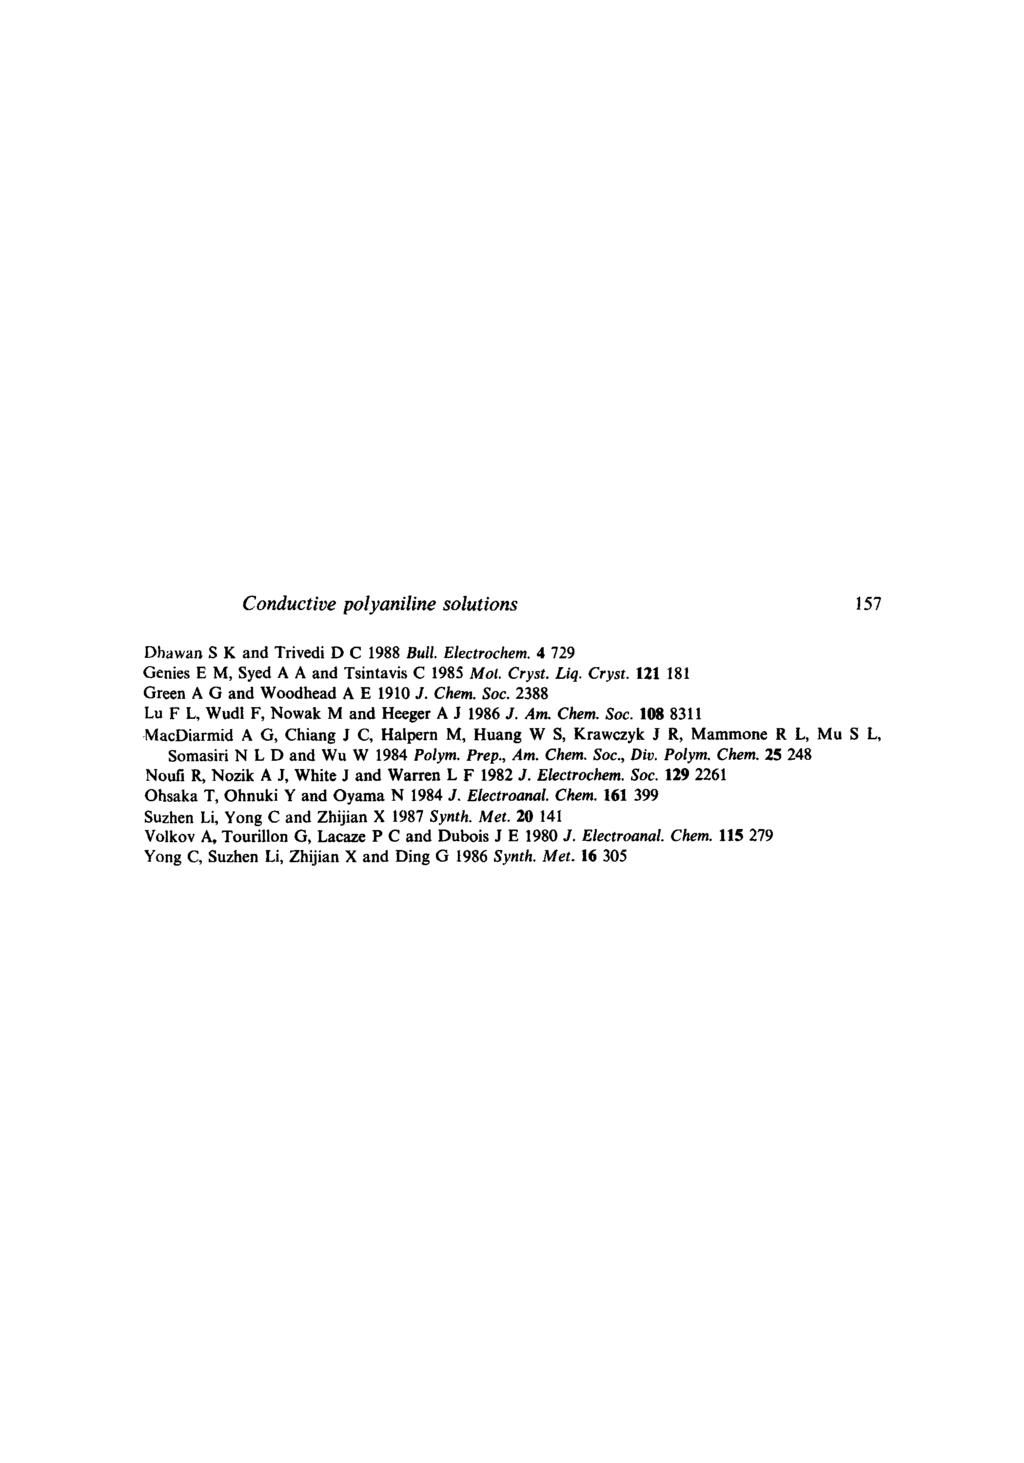 Conductive polyaniline solutions 157 Dhawan S K and Trivedi D C 1988 Bull. Electrochem. 4 729 Genies E M, Syed A A and Tsintavis C 1985 Mol. Cryst. Liq. Cryst. 121 181 Green A G and Woodhead A E 1910 J.